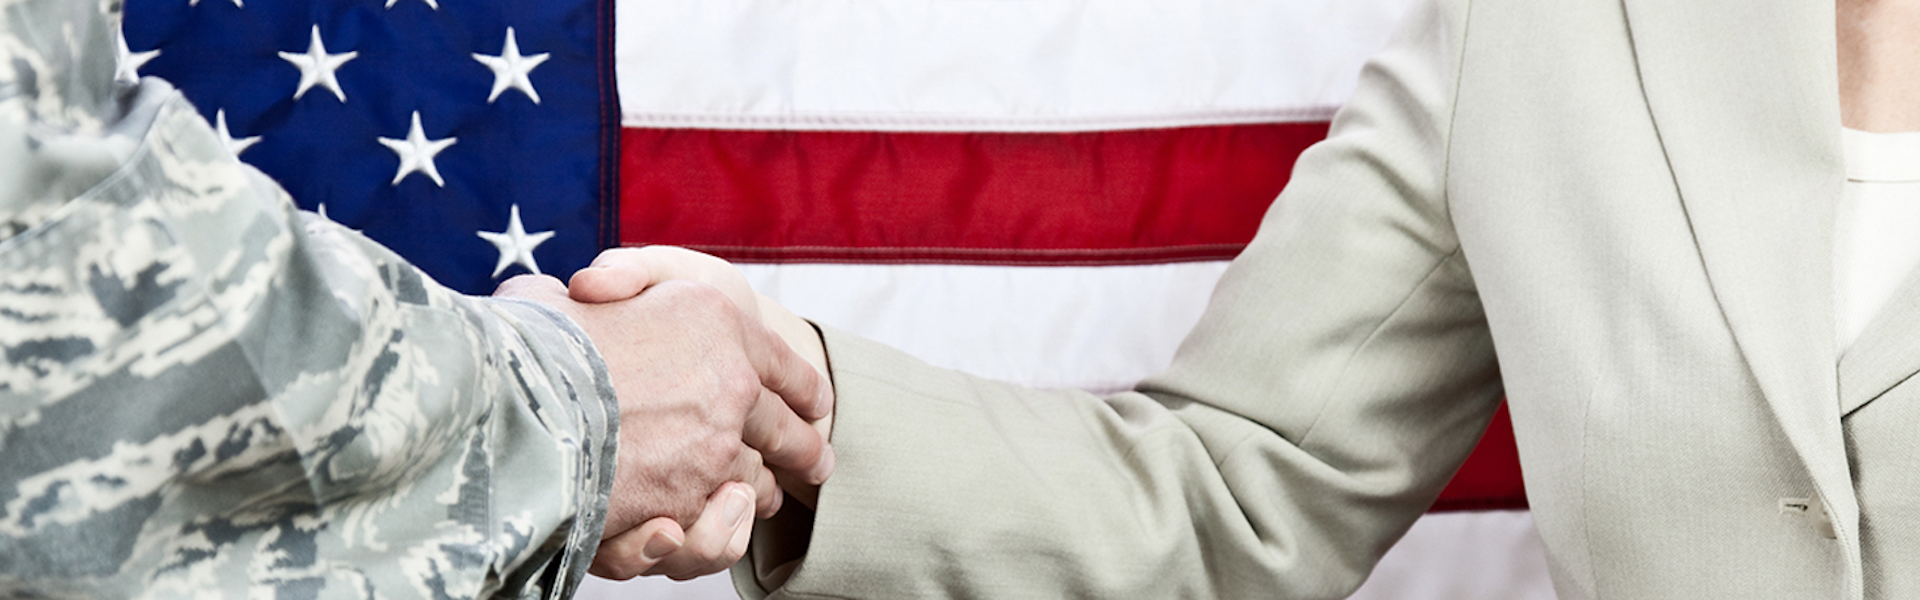 Handshake in front of American flag